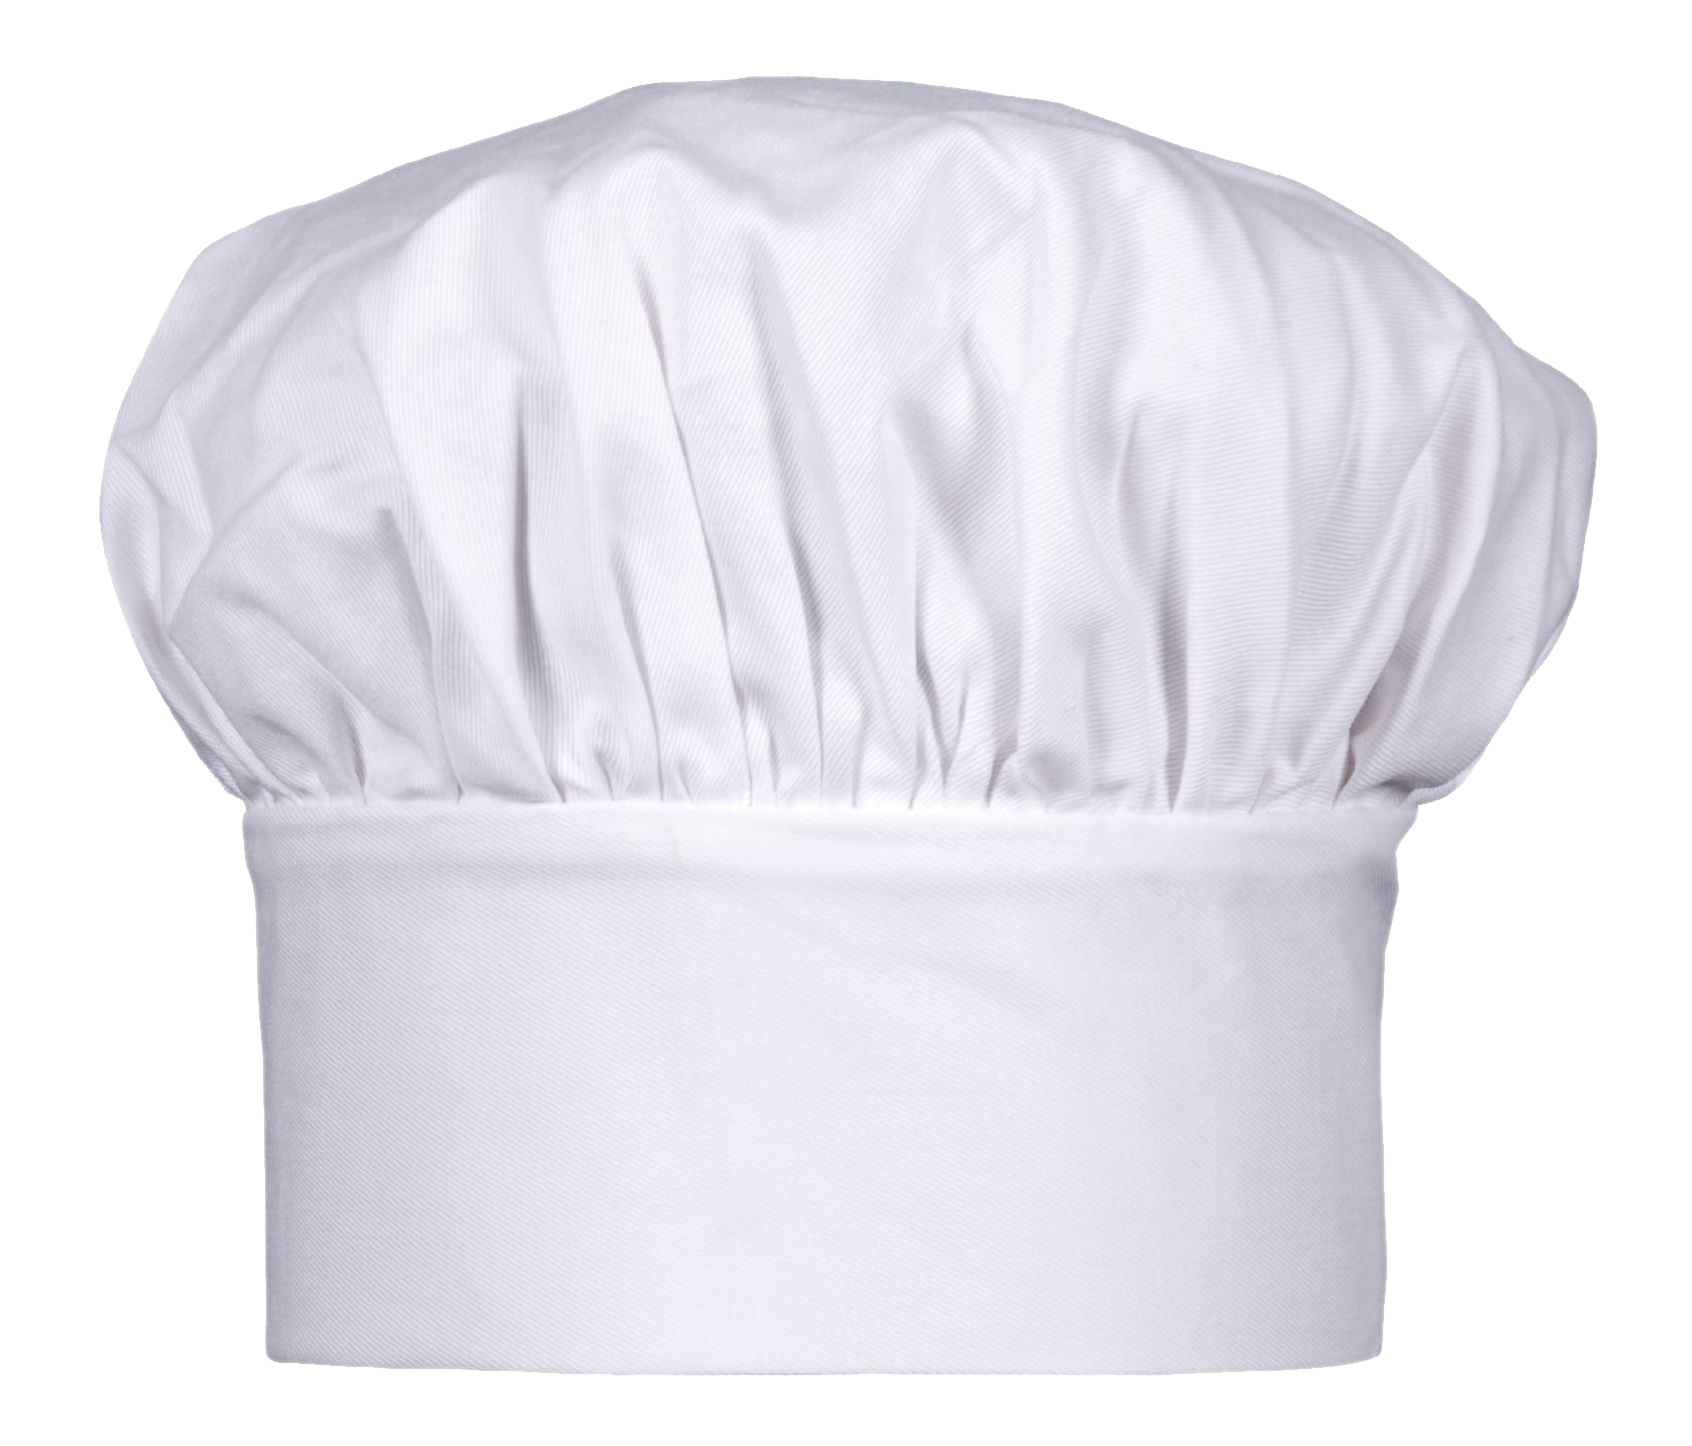 Download PNG image - Chef Hat Transparent Background 